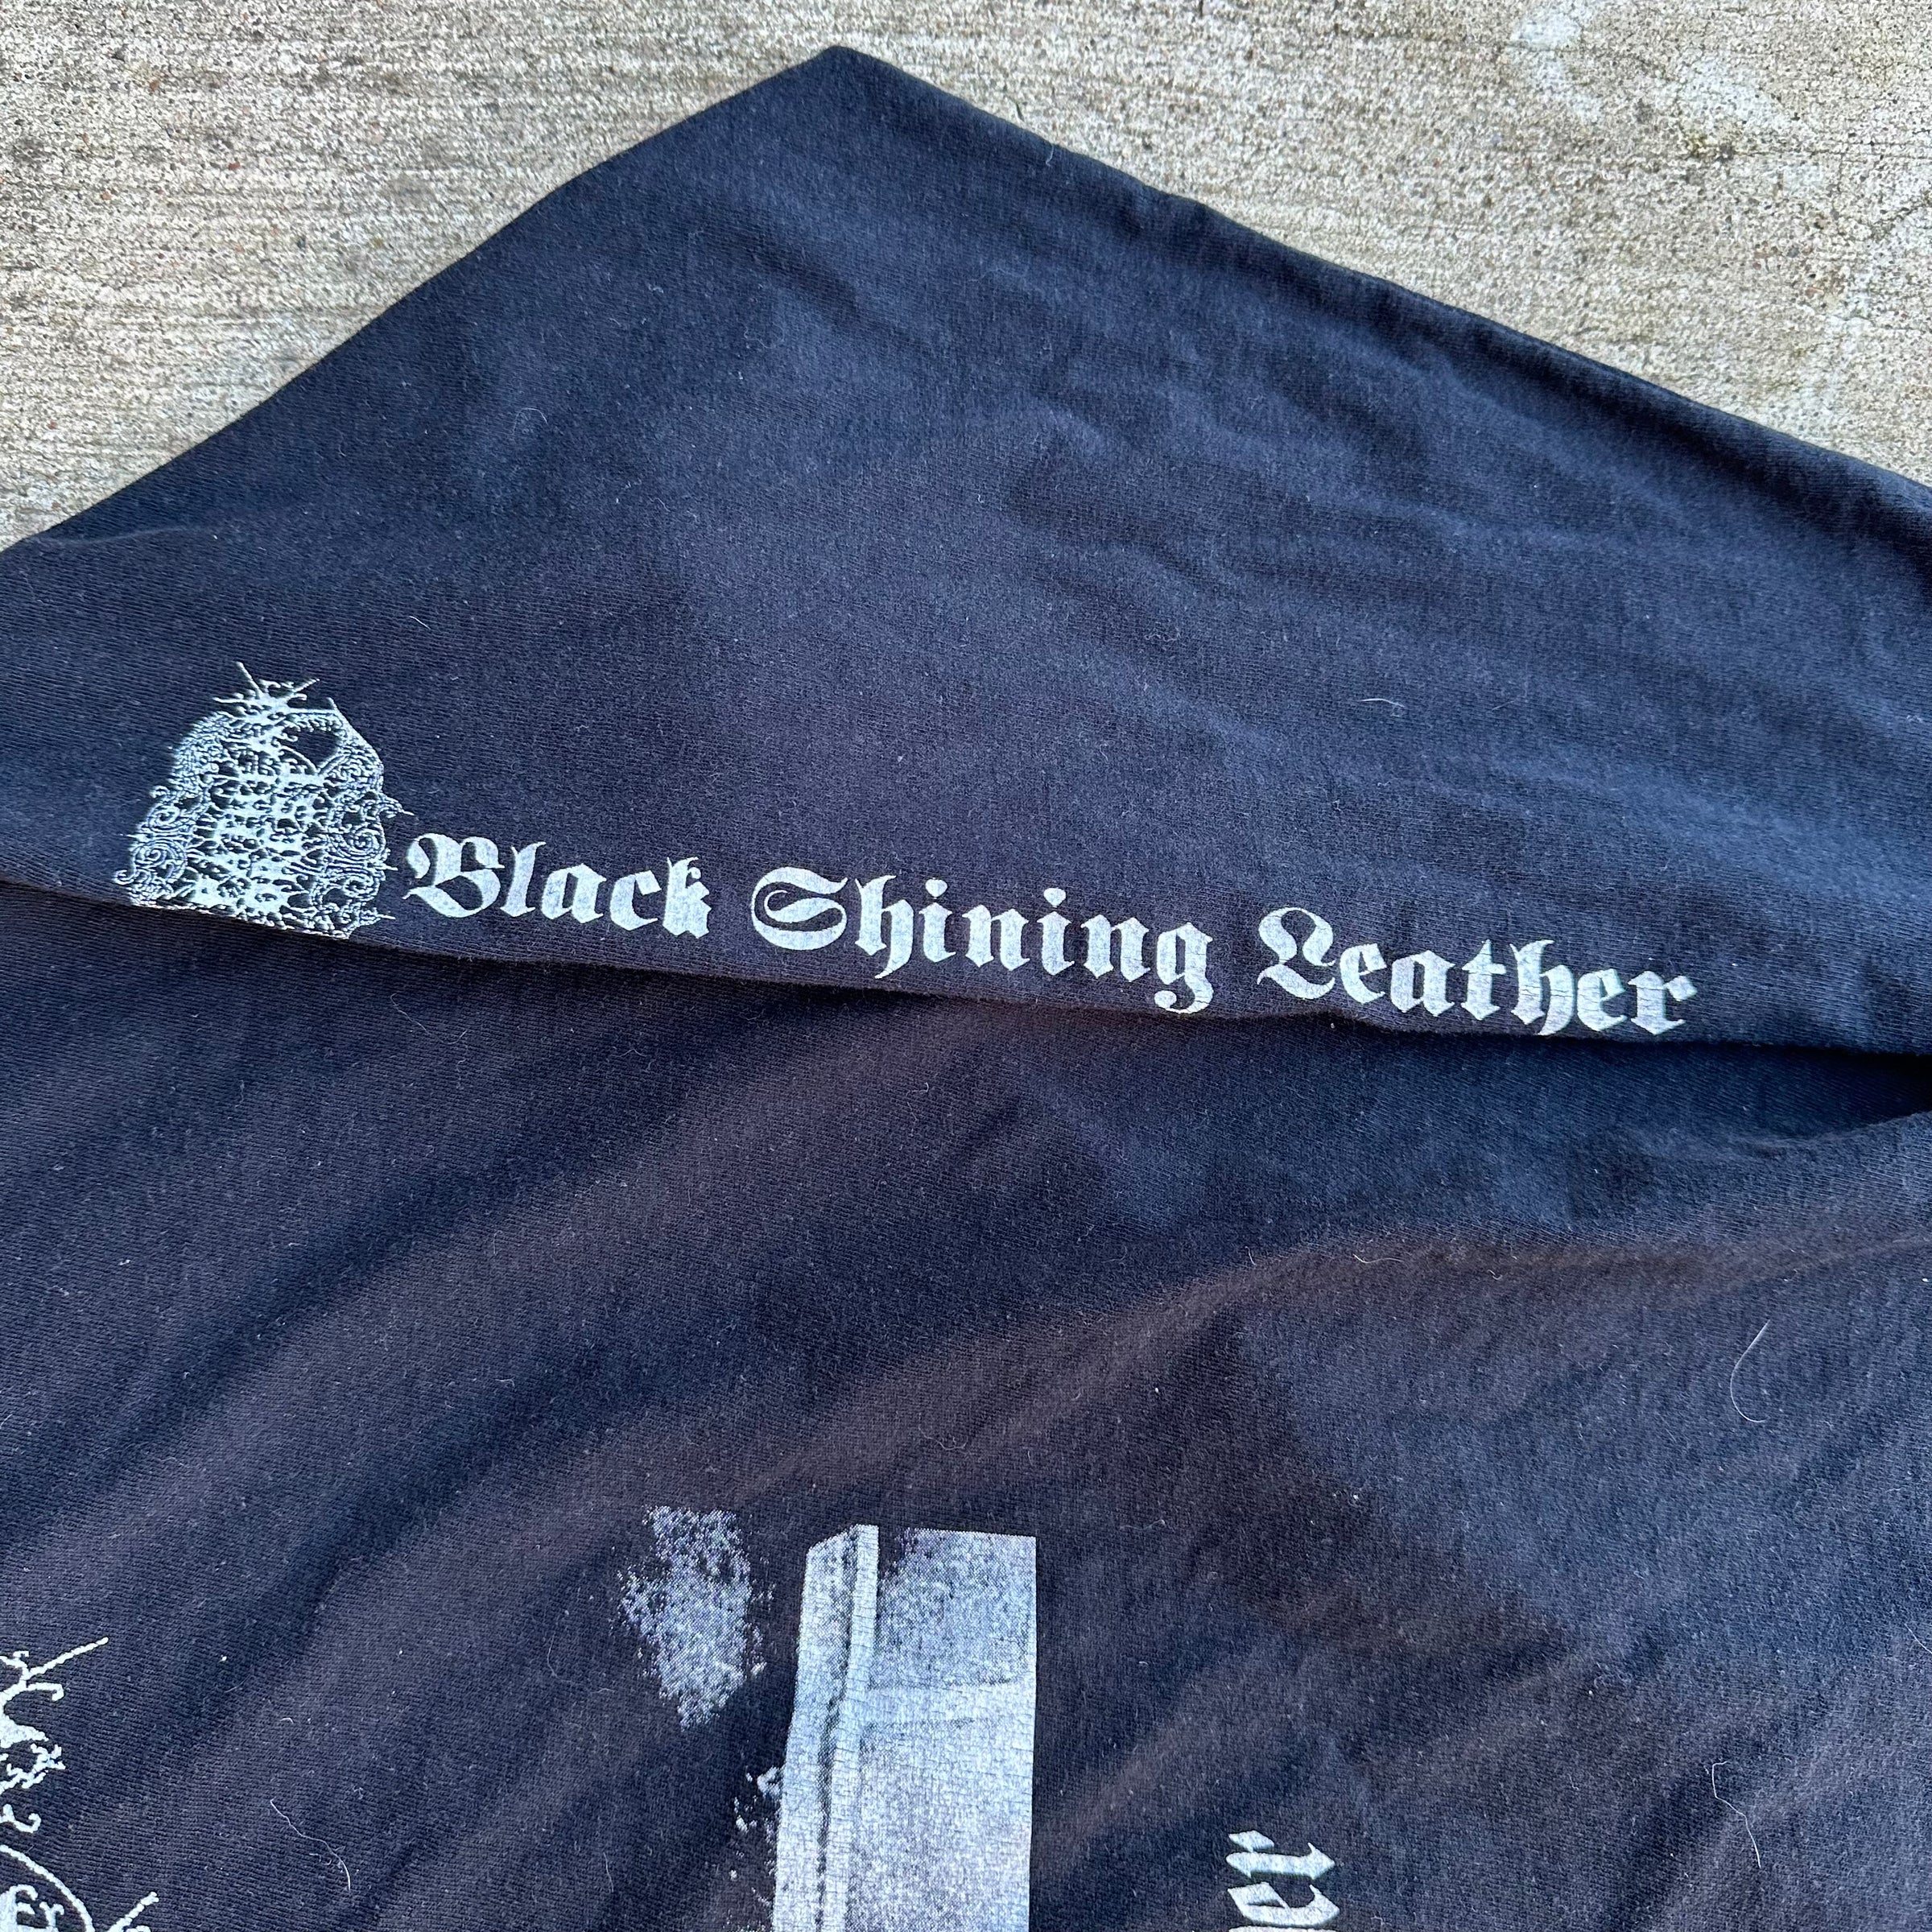 1998 Carpathian Forest “Black Shining Leather” Album Longsleeve T-Shirt XL